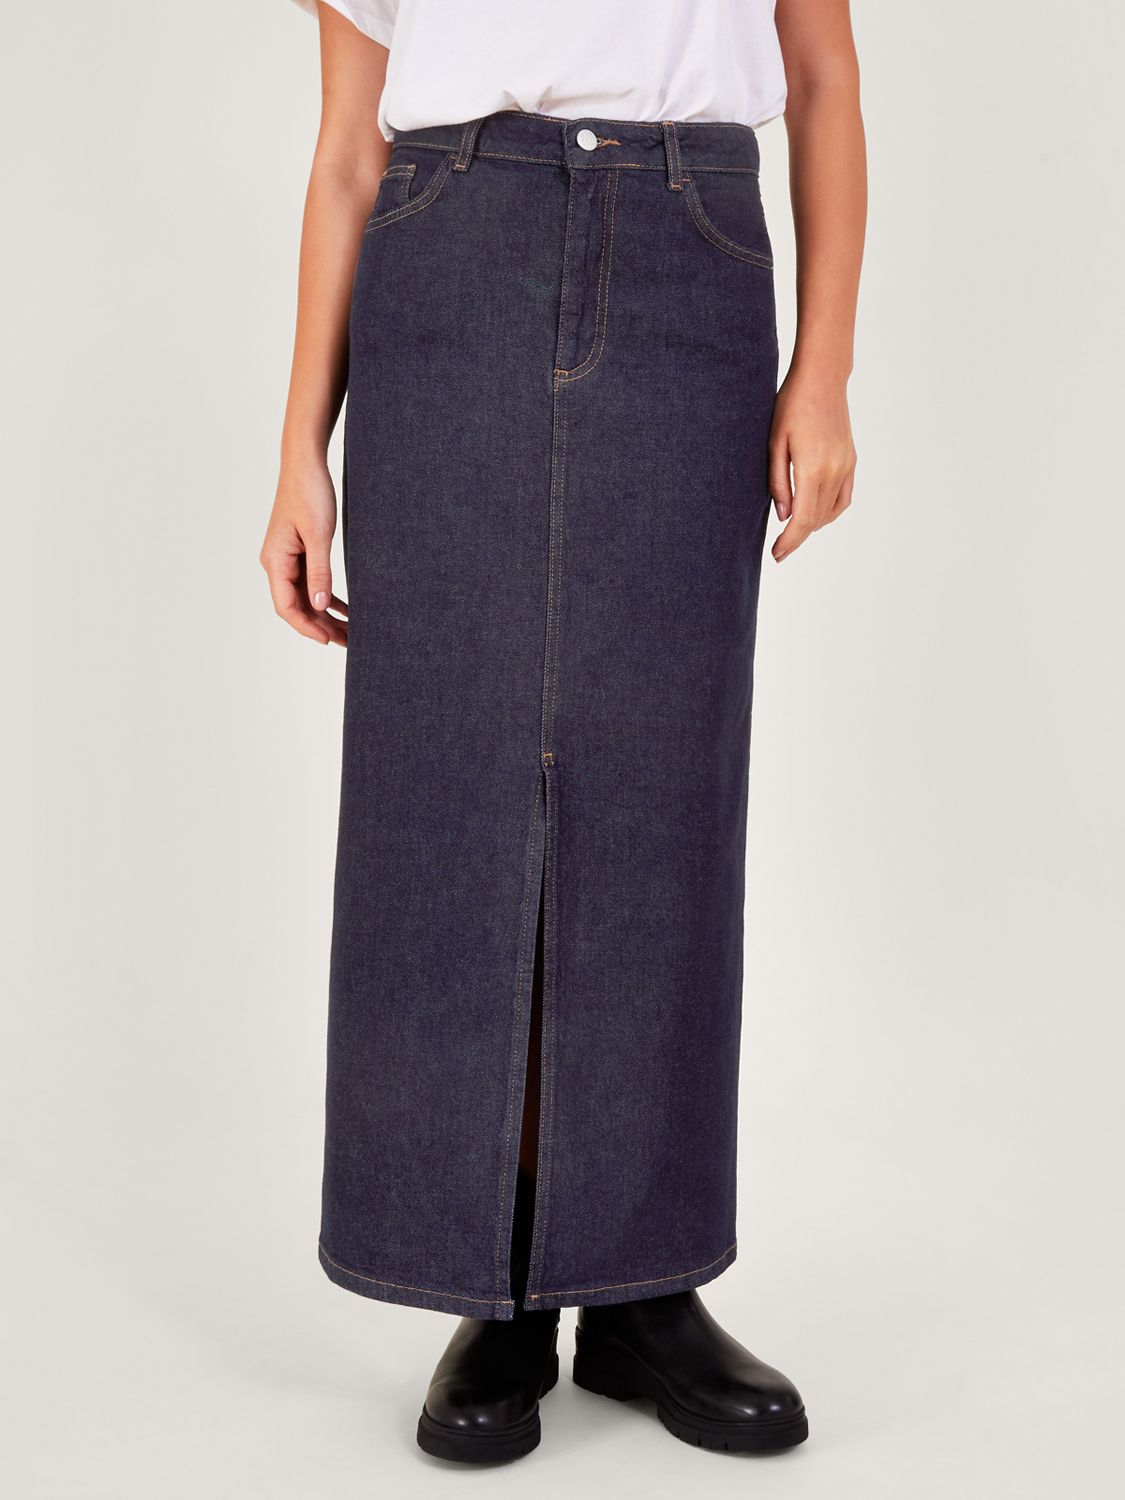 Monsoon Mia Denim Maxi Skirt, Indigo at John Lewis & Partners